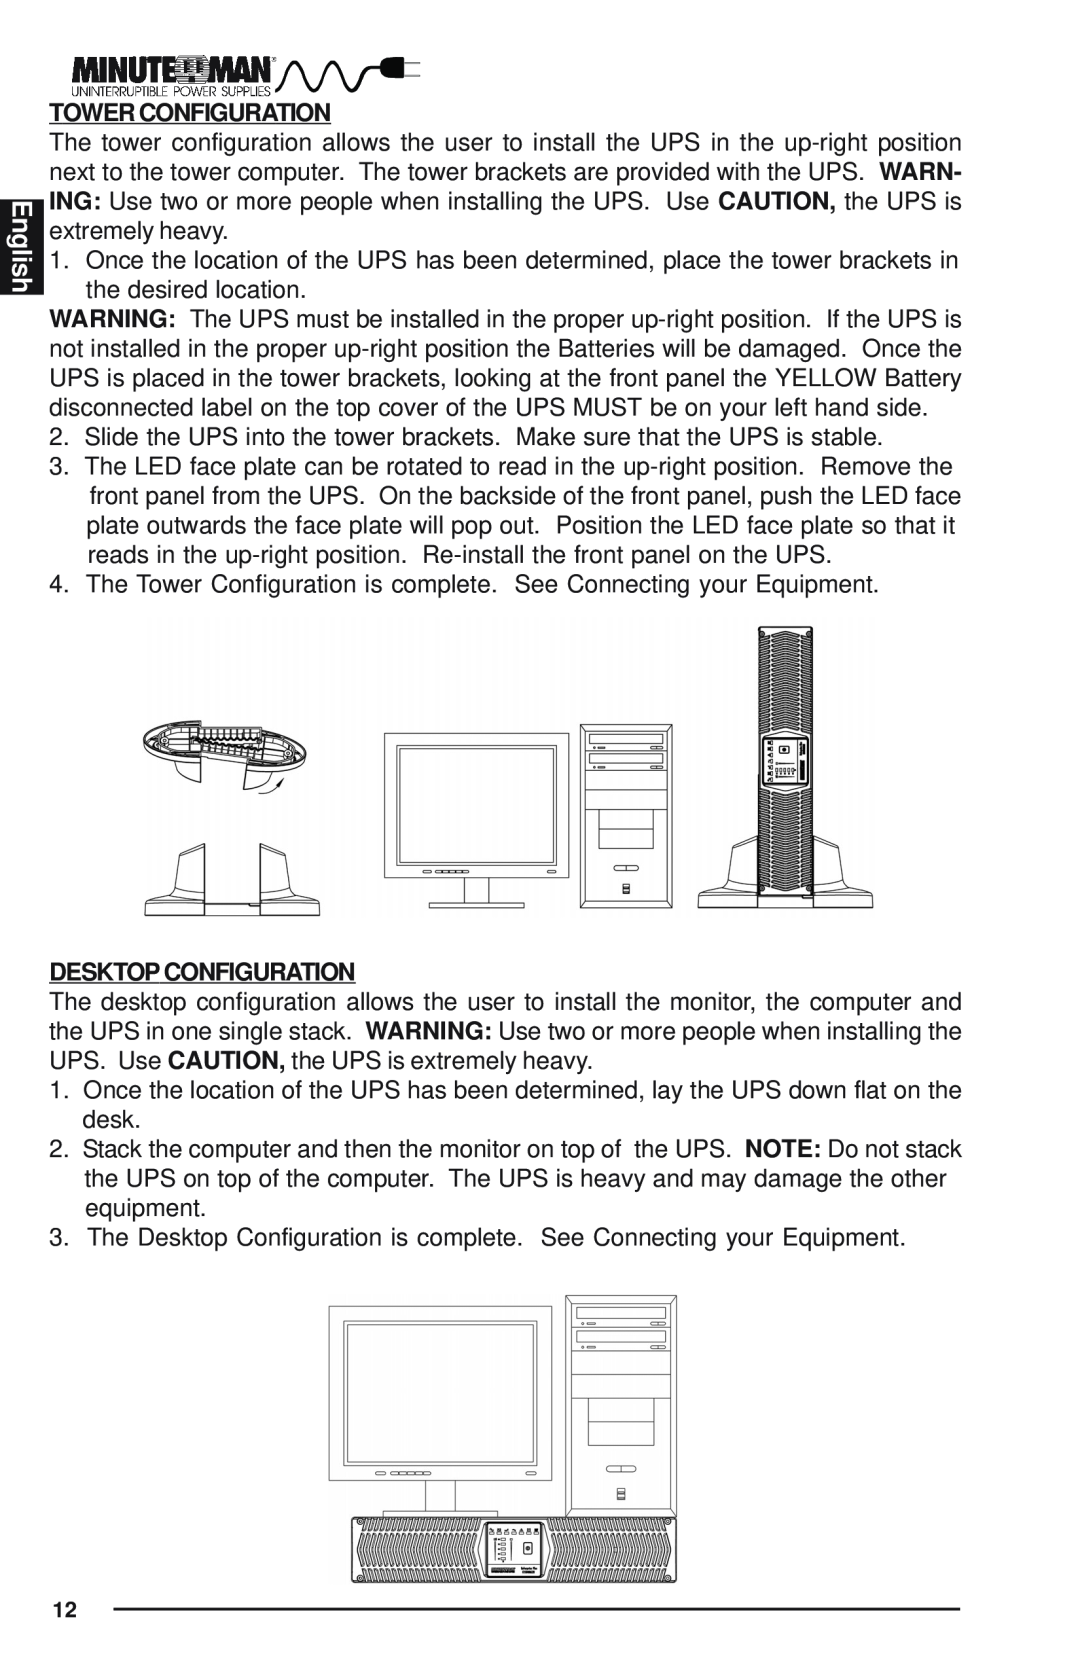 Minuteman UPS Enterprise Plus Series user manual English, Tower Configuration, Desktop Configuration 